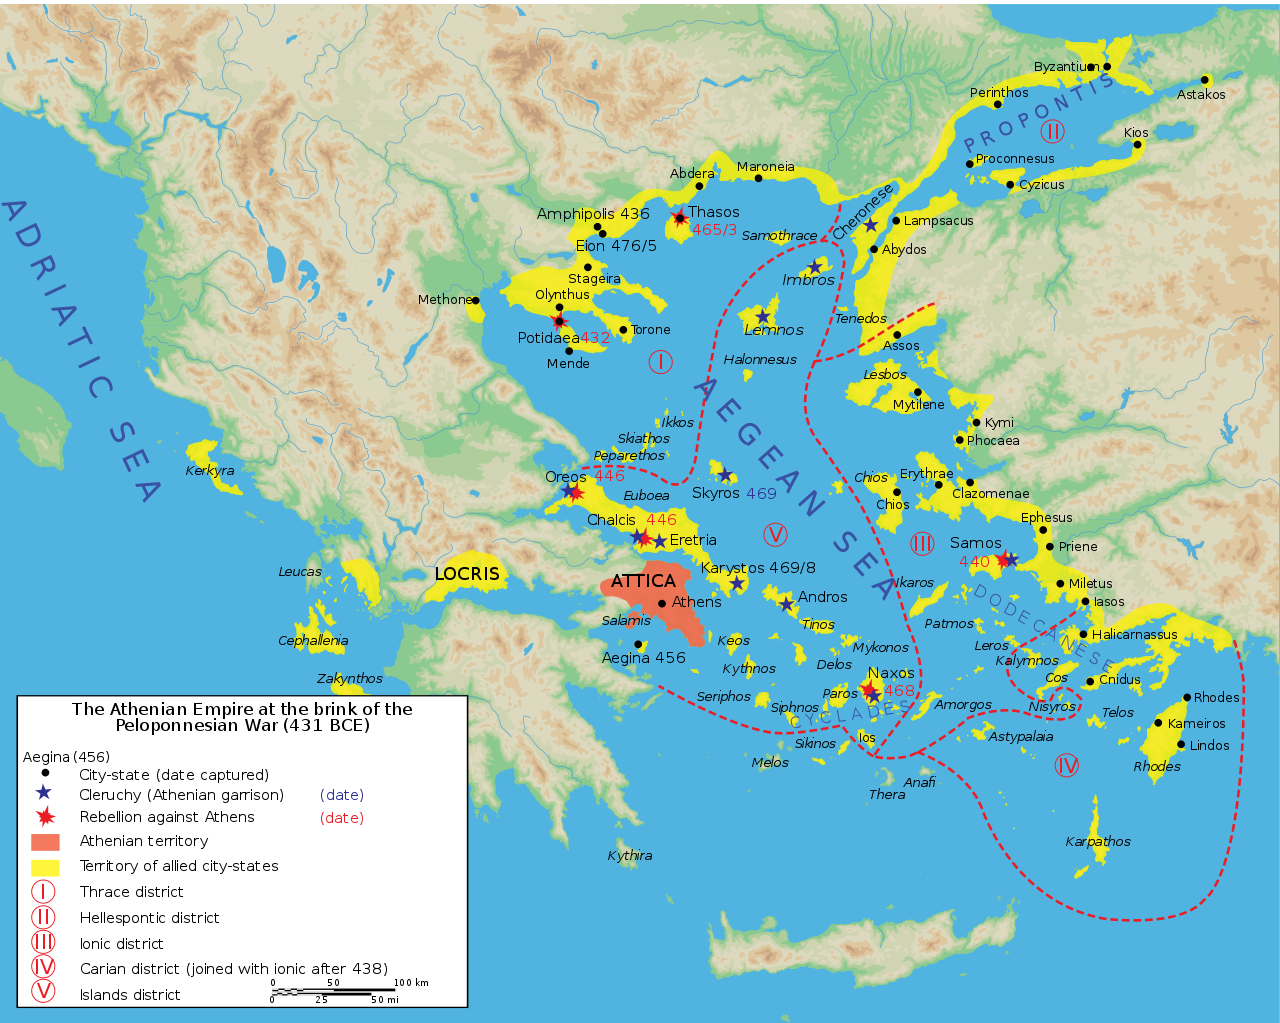 Athenian Empire circa 431 B.C.